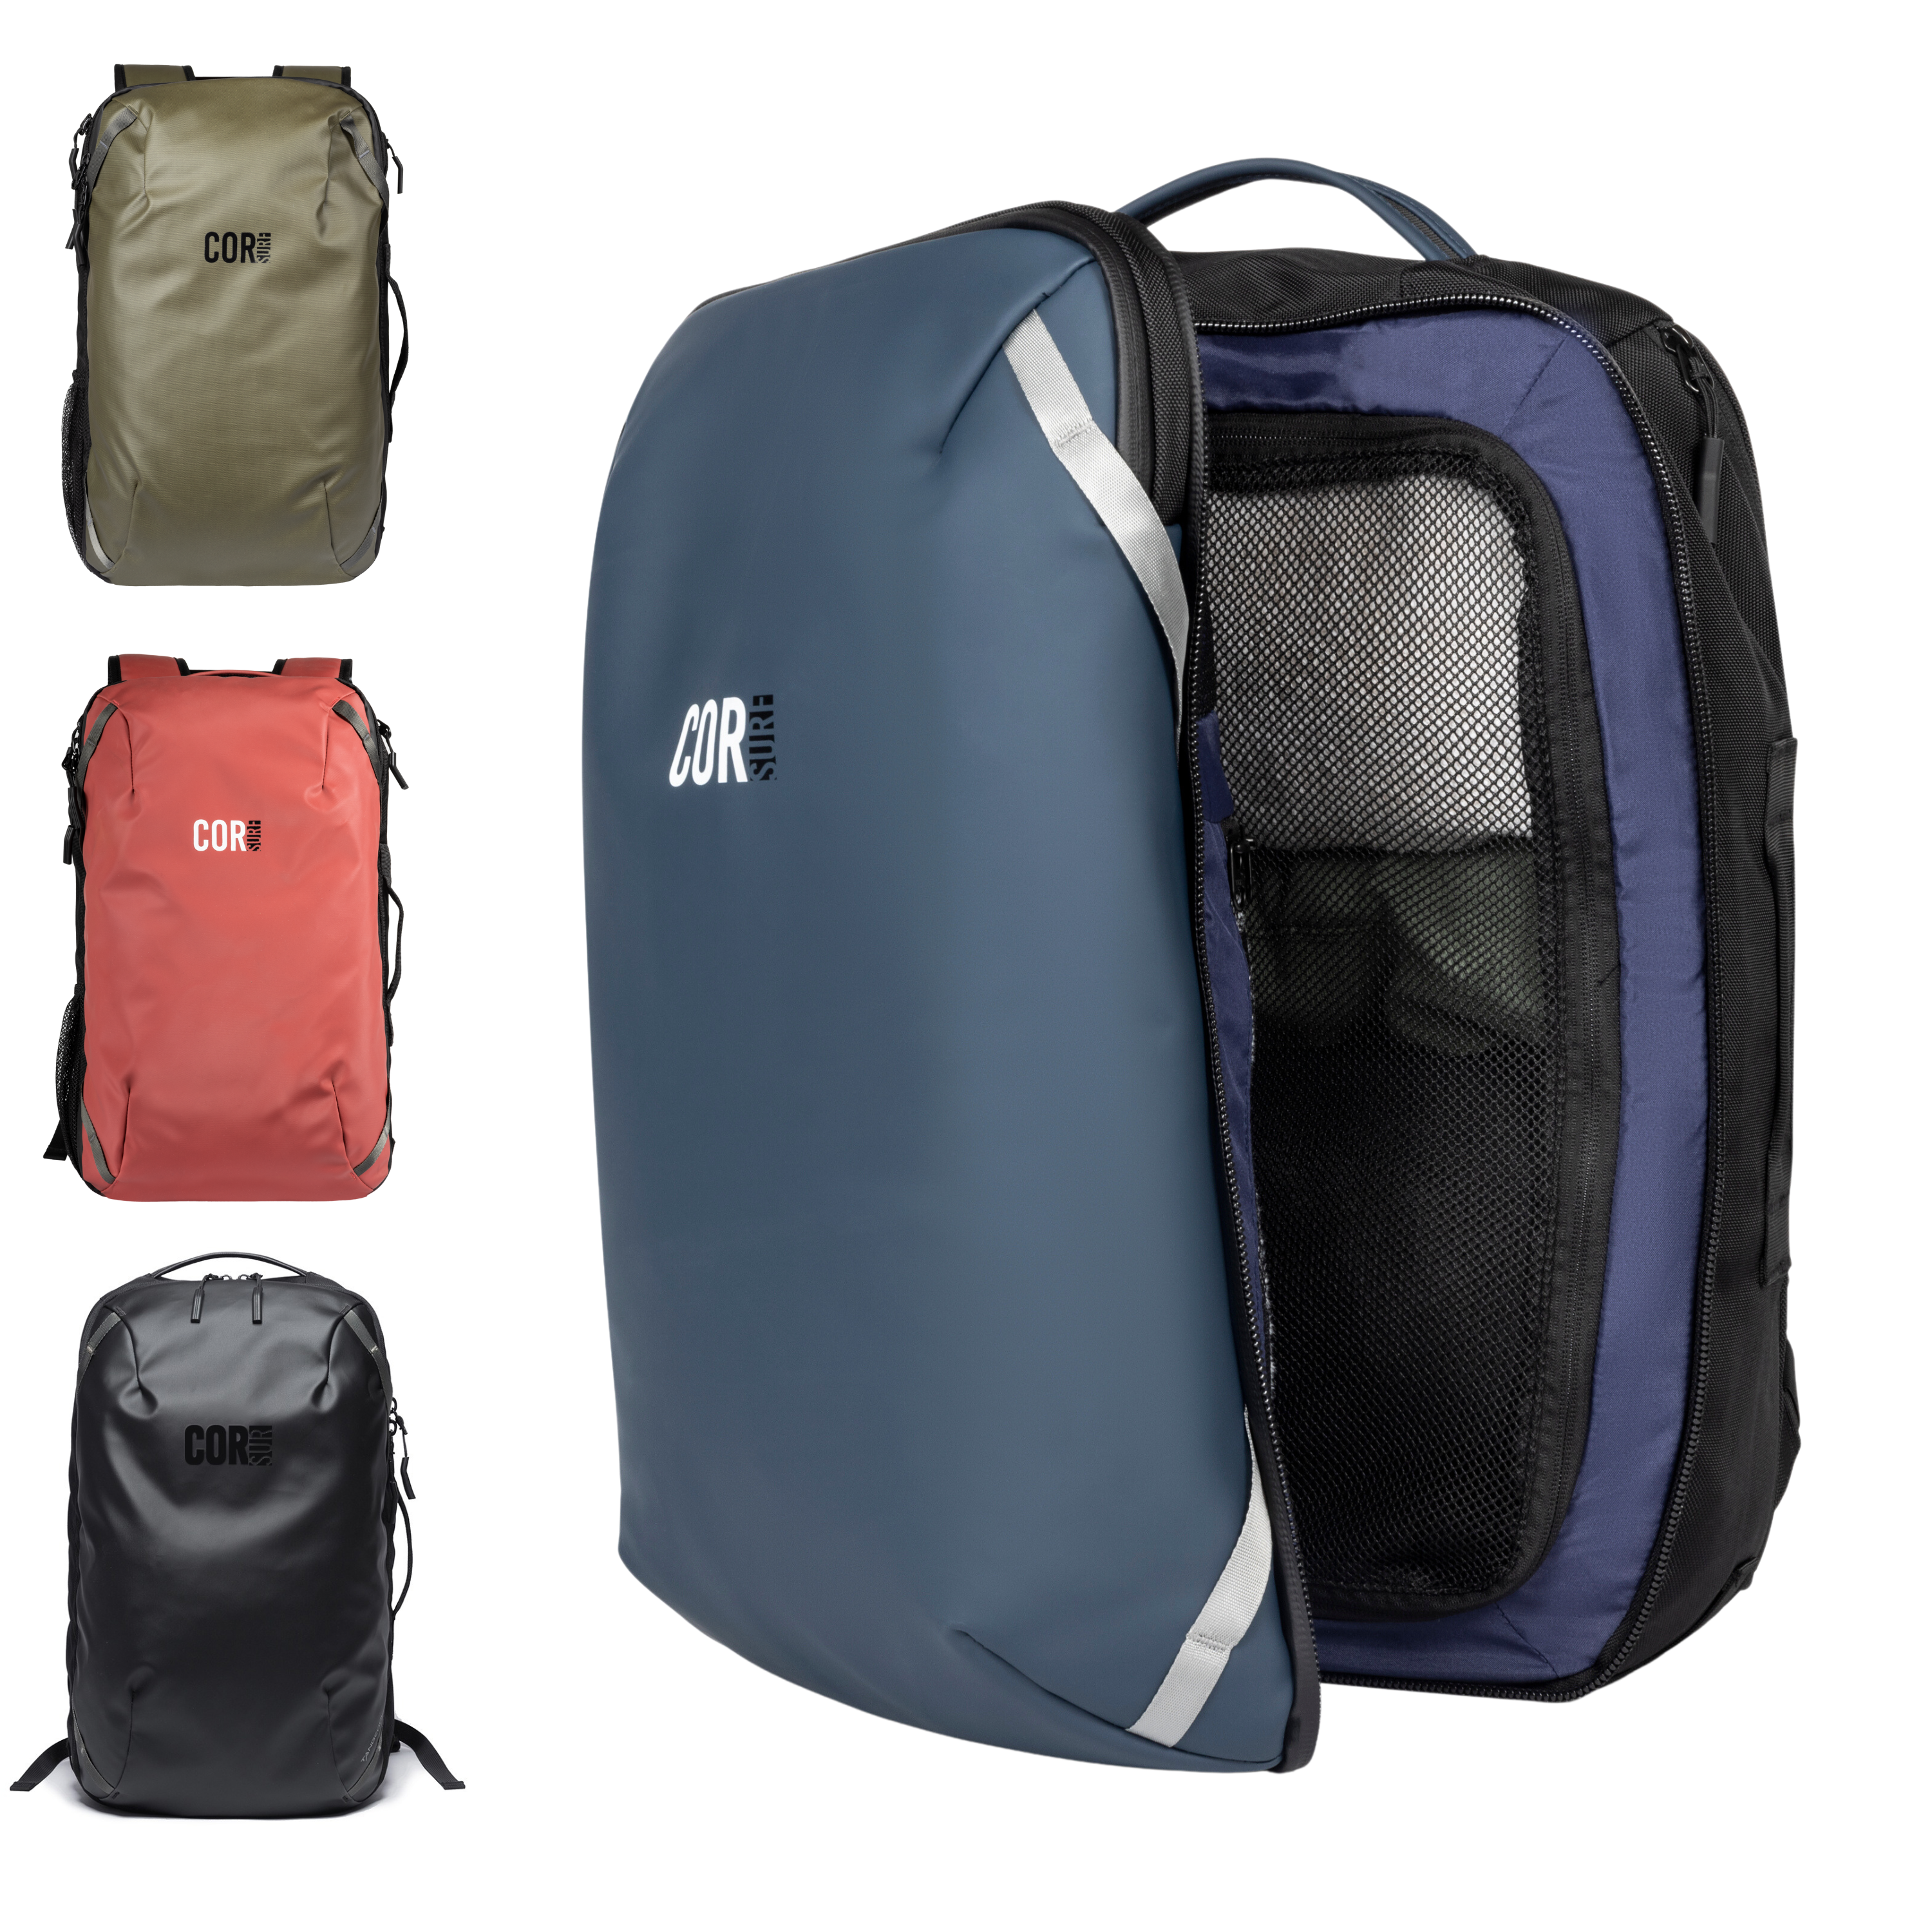 NEW! The Island Hopper Travel Backpack 40L